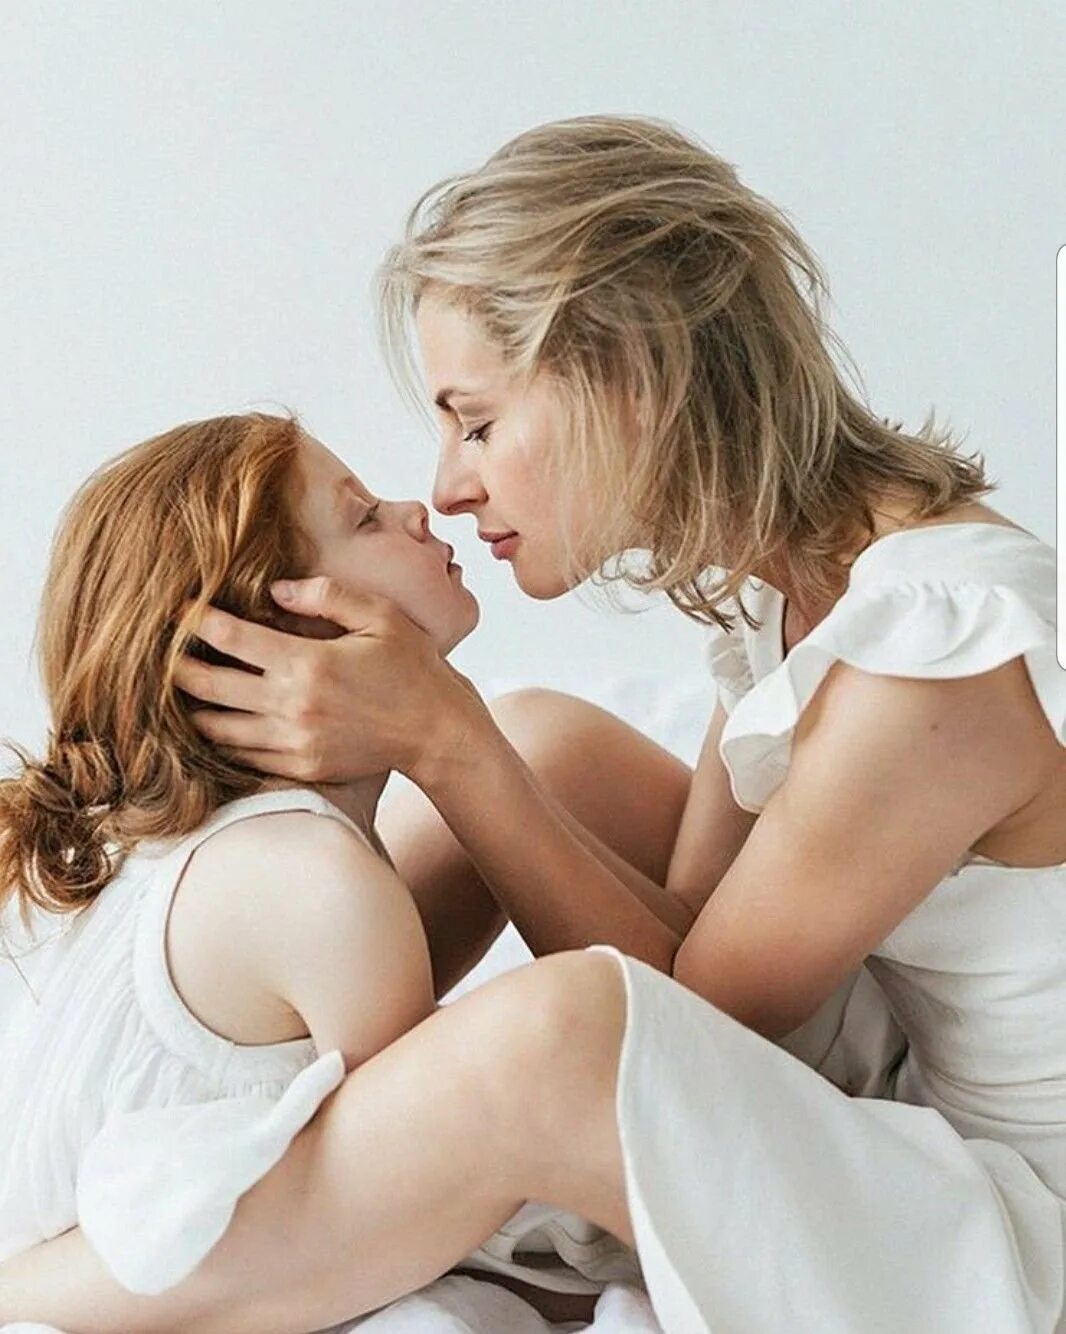 Мама с дочкой лесбиянки видео. Мама и дочка. Соблазнительные мама и дочь. Соблазн матери.